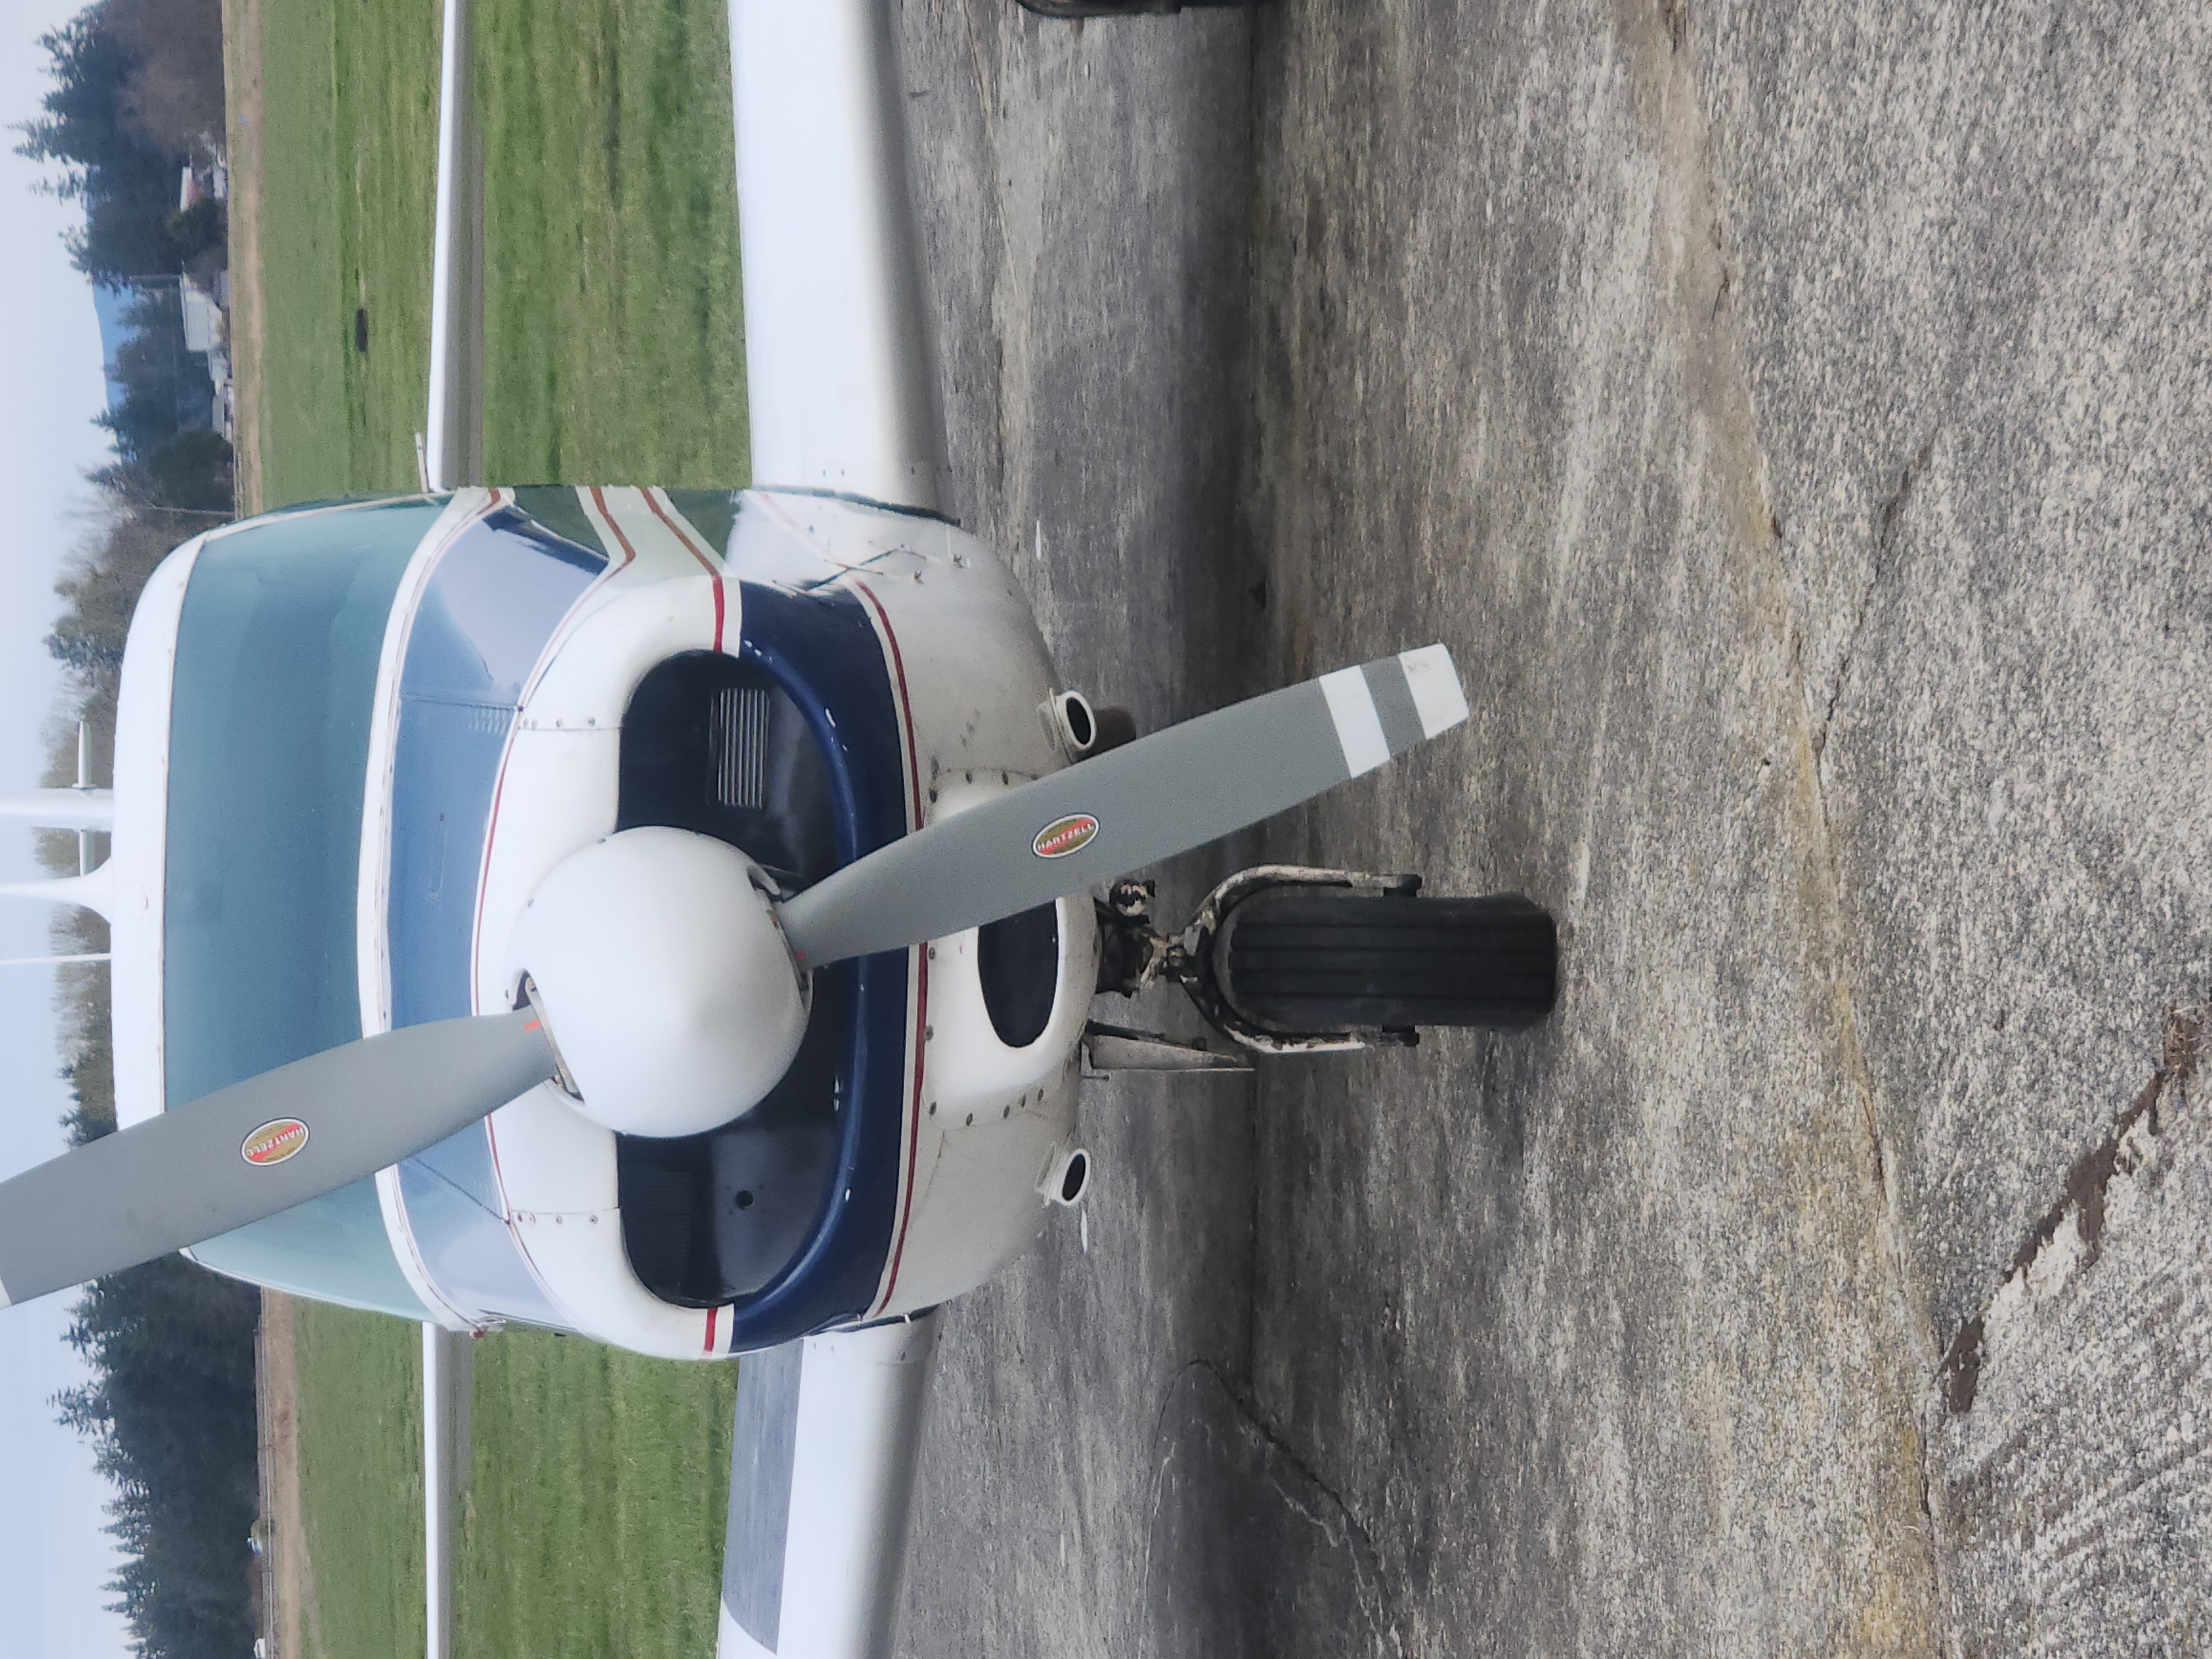 n7576p front gear| Sequim Flight instructor Scott Brooksby